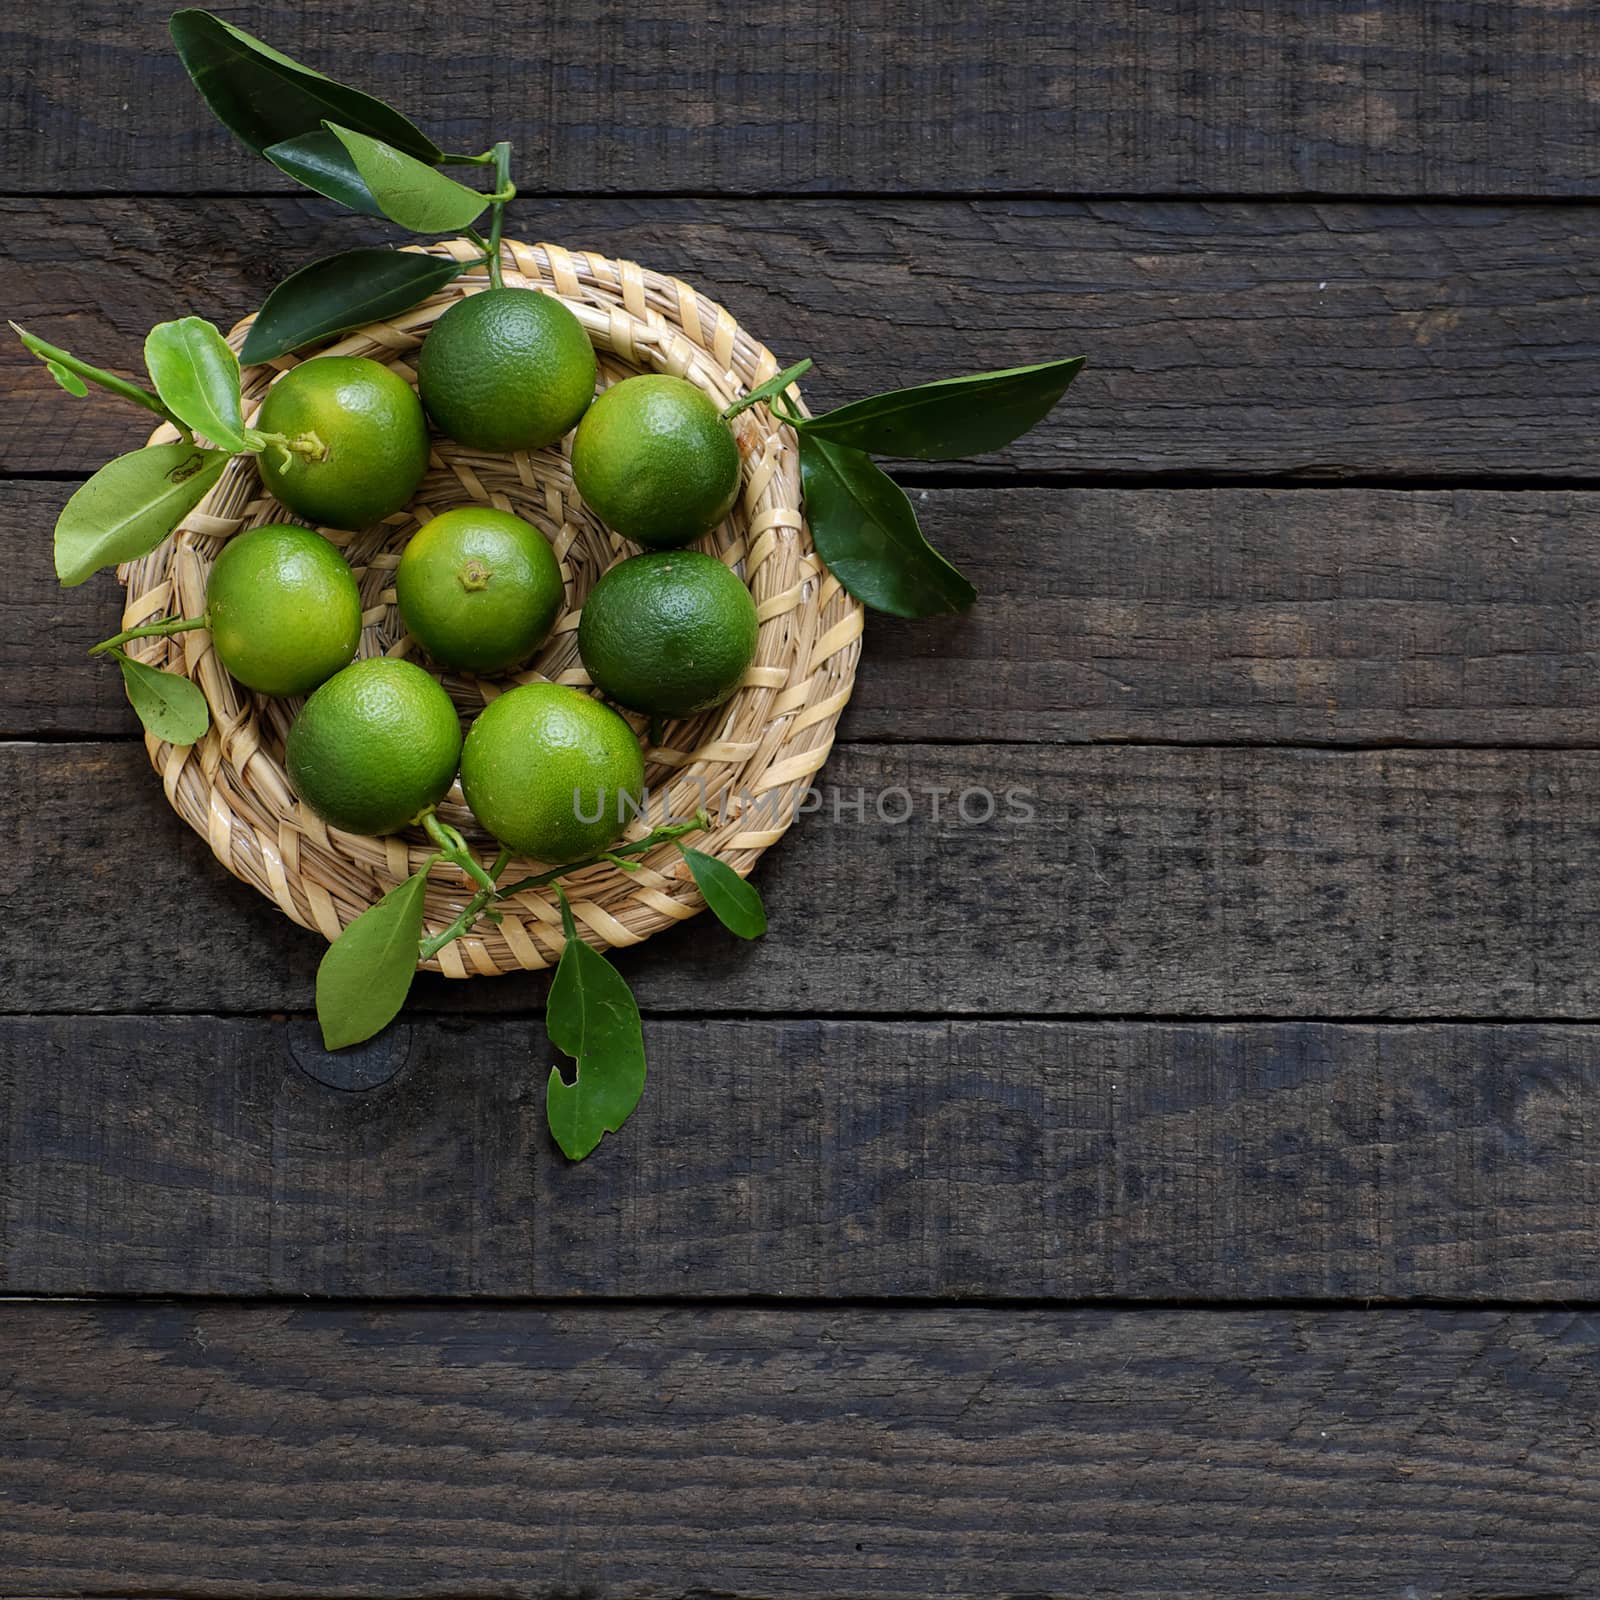 Green Kumquat fruit on wooden background by xuanhuongho